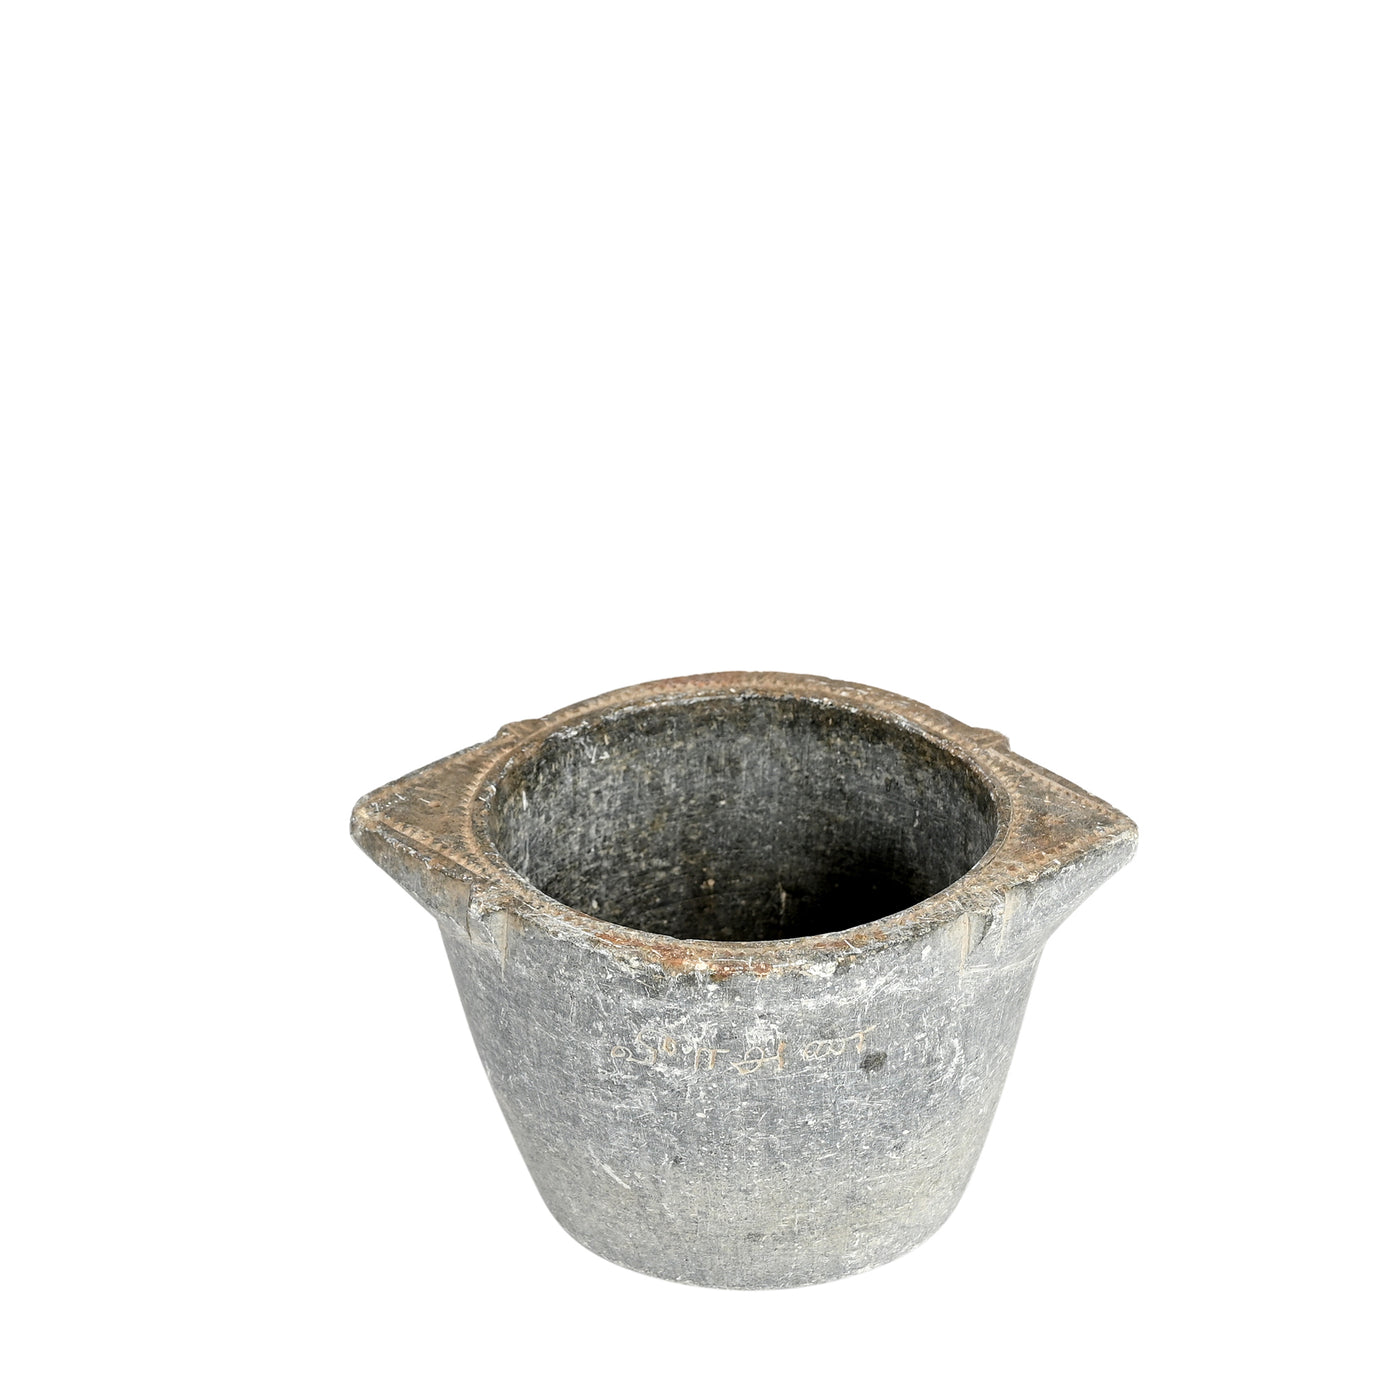 Kovaya - Stone bowl n ° 3